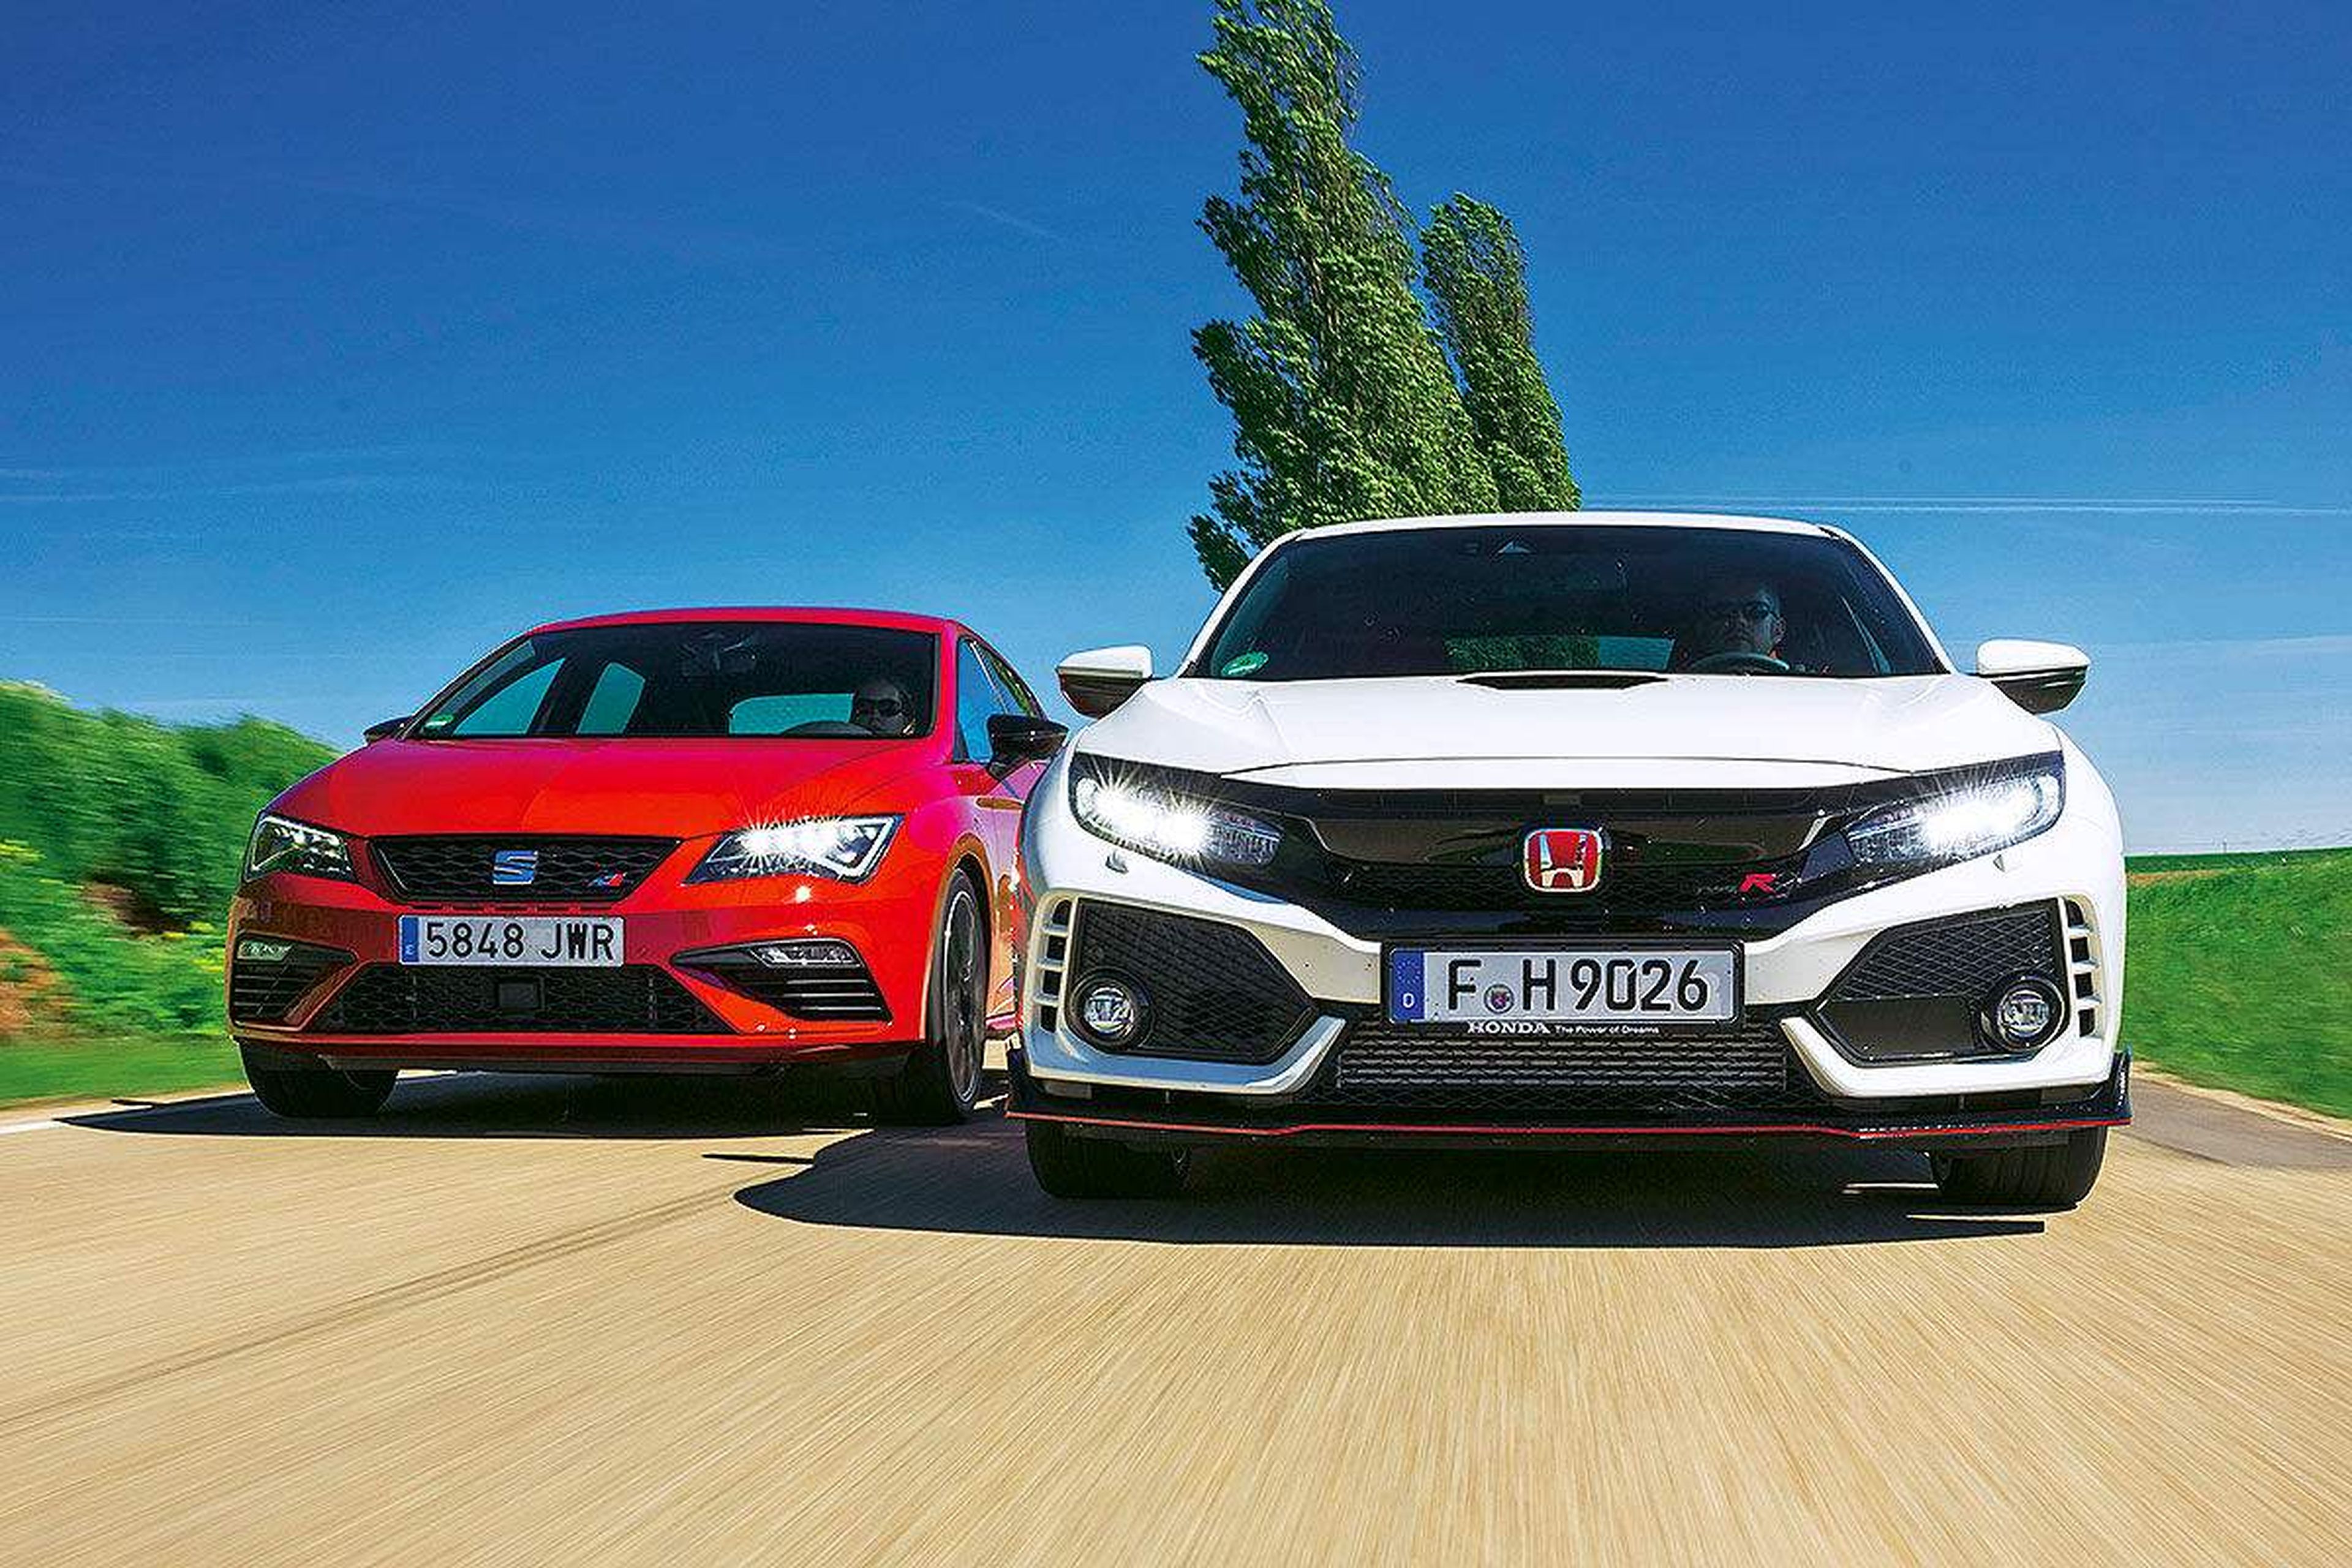 Comparativa: Honda Civic Type R vs Seat León Cupra